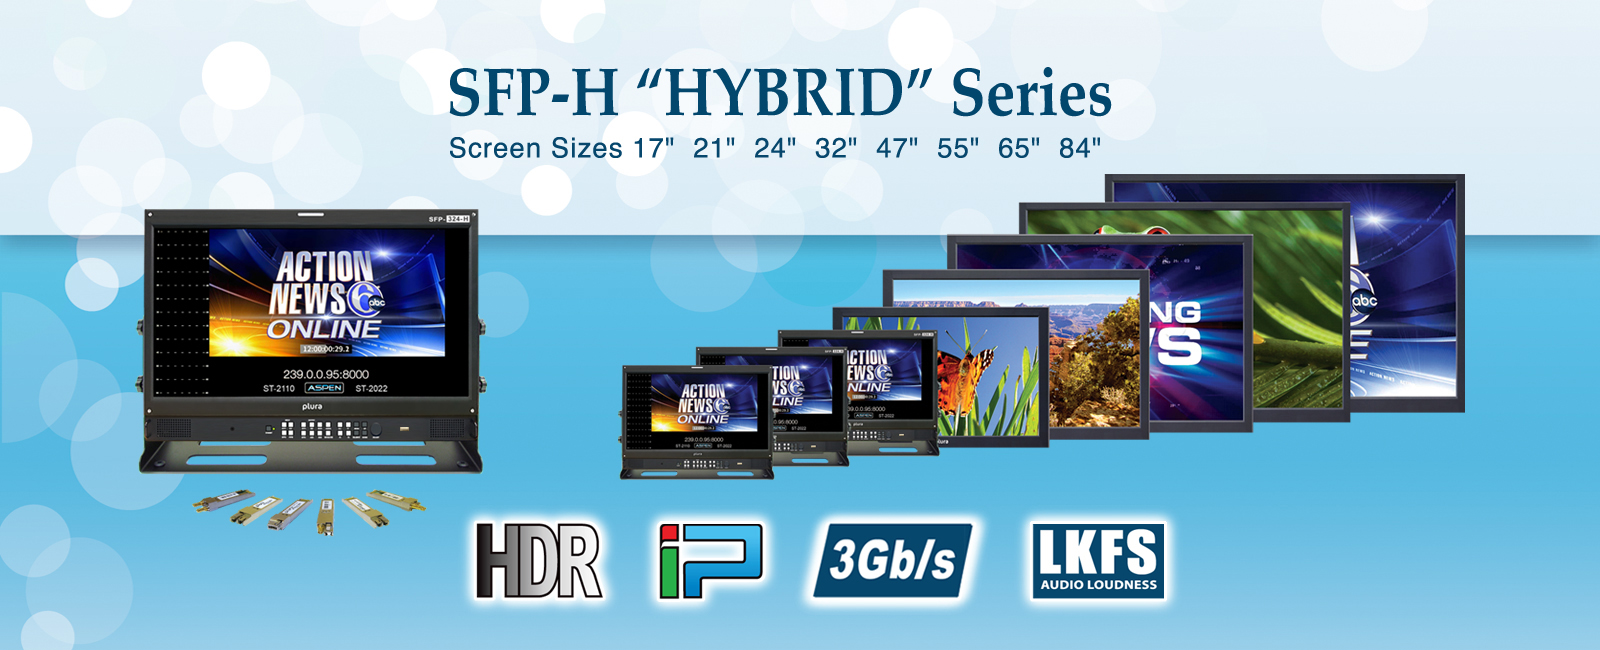 SFP-H Series introduced